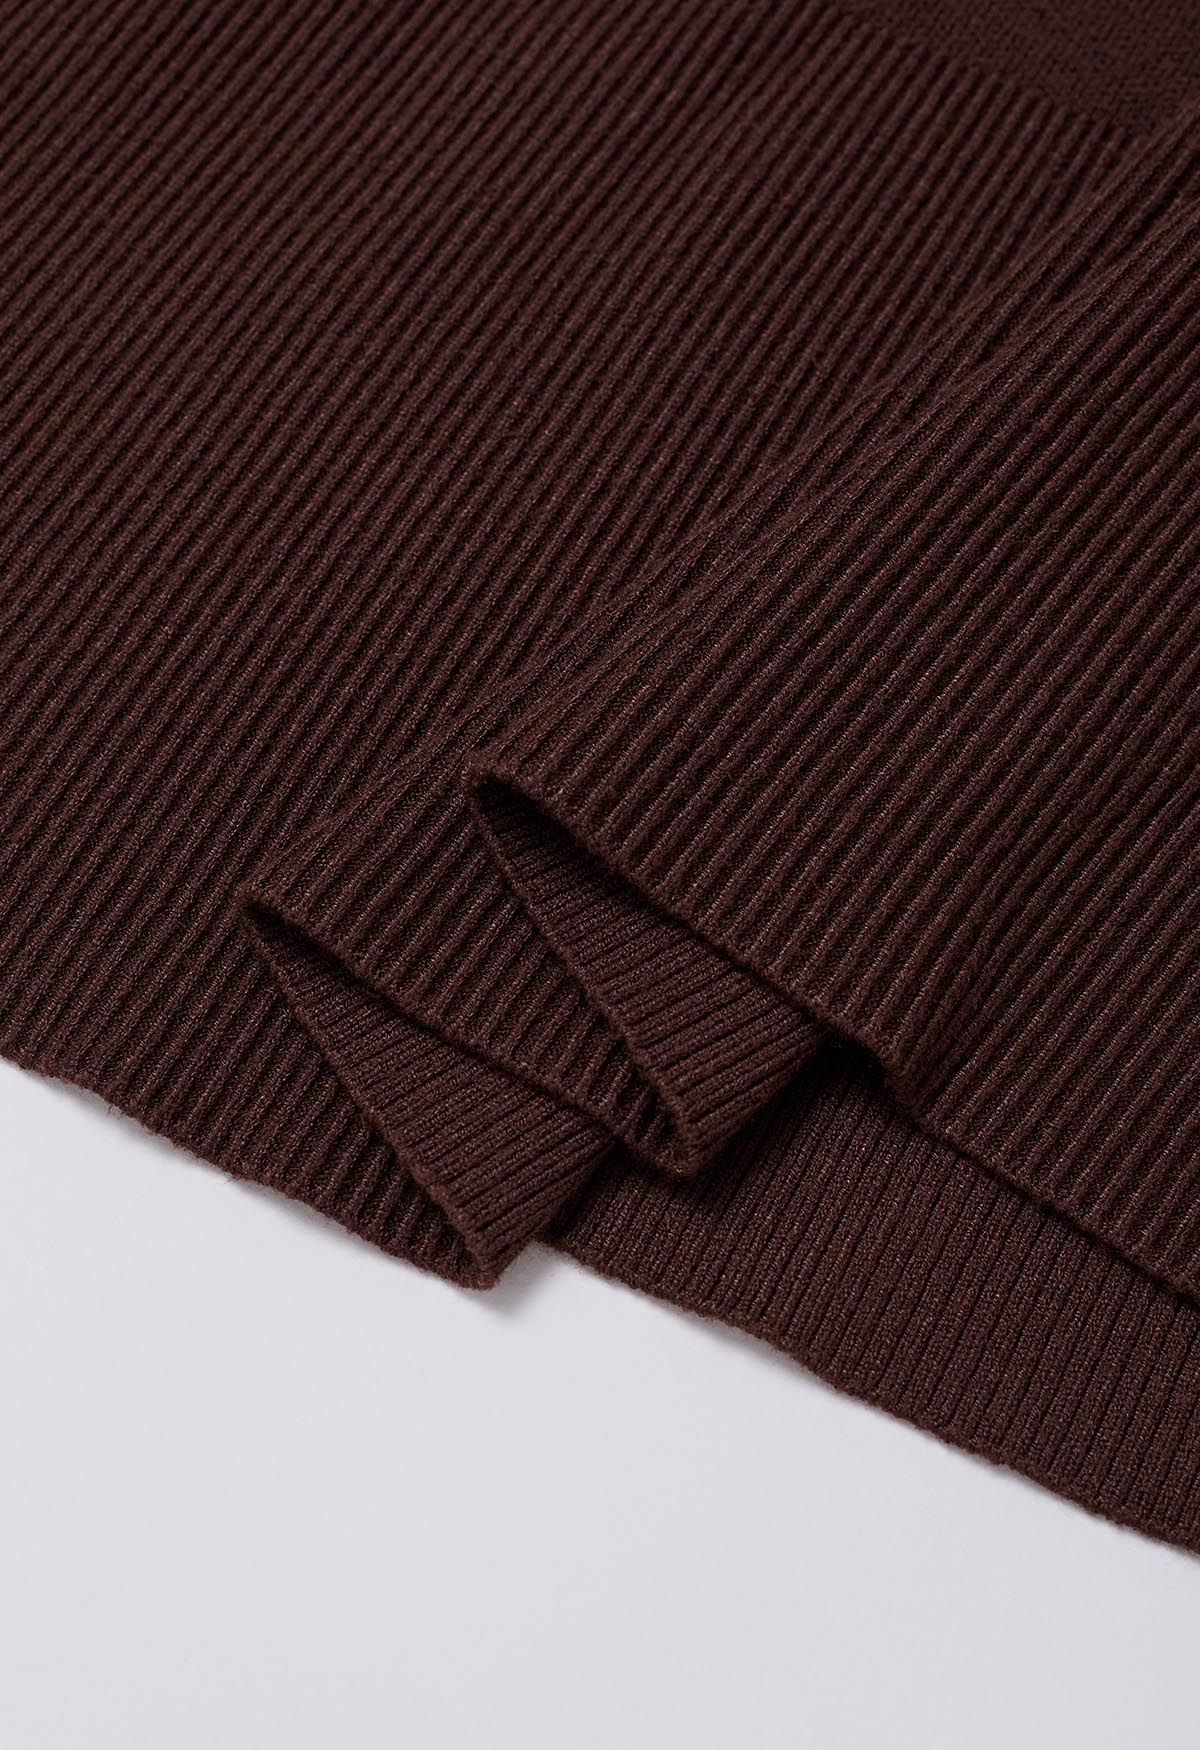 Slit Hem Ribbed Detail Soft Knit Sweater in Brown